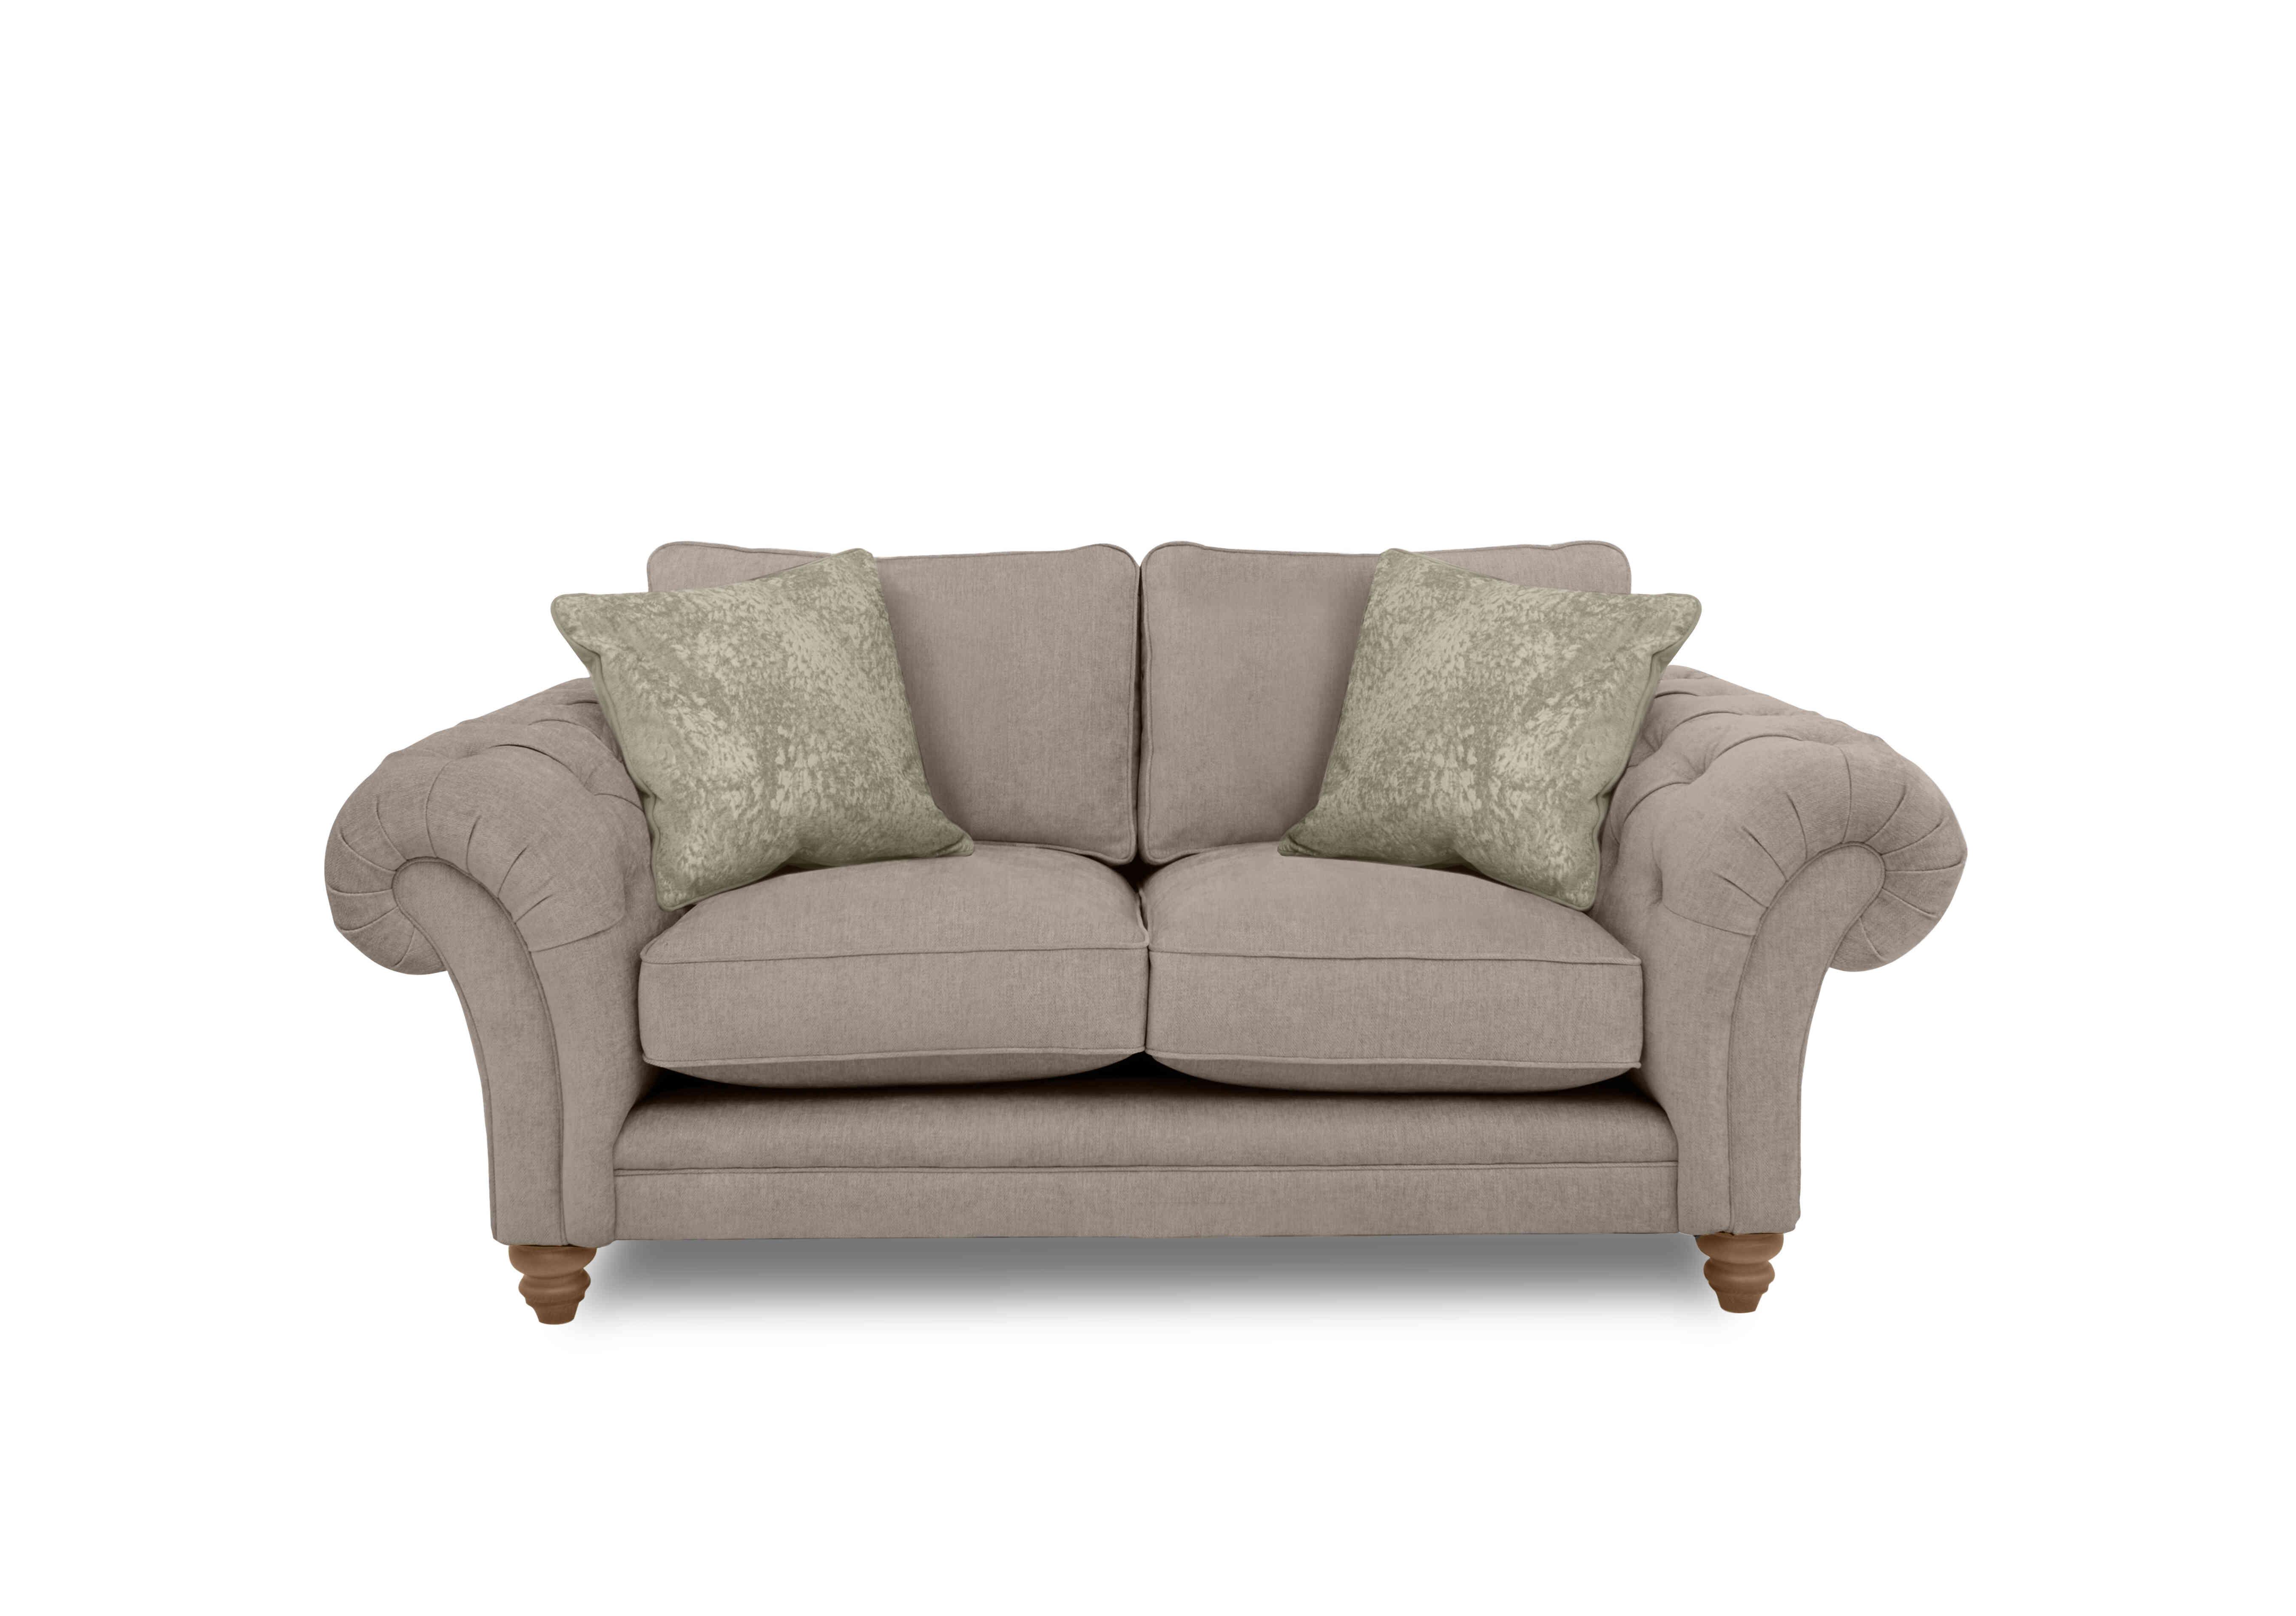 Blenheim 2 Seater Classic Back Sofa in Darwin Mink Of on Furniture Village